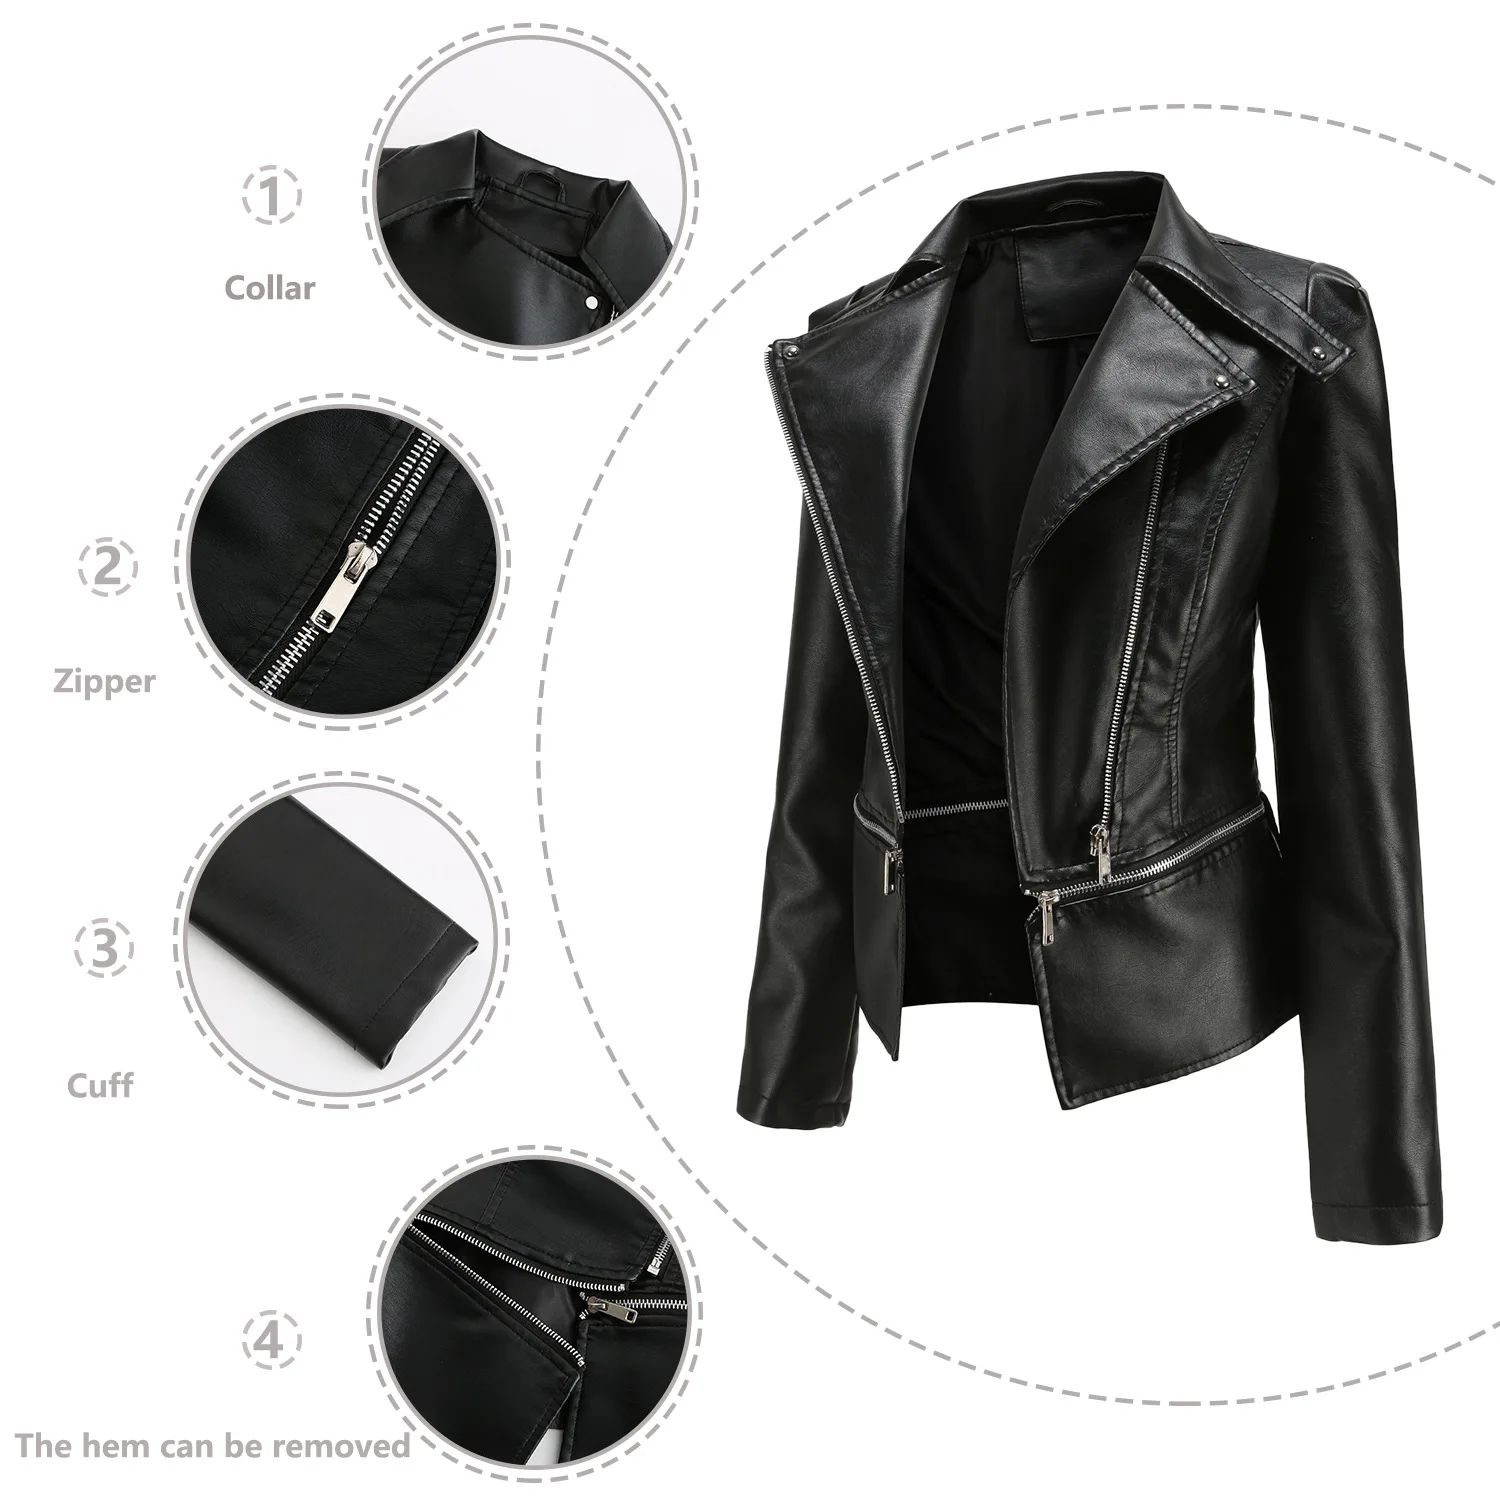 New Leather Women's Hem Detachable Spring and Autumn Coat Ladies Fashion Casual Jacket enlarge